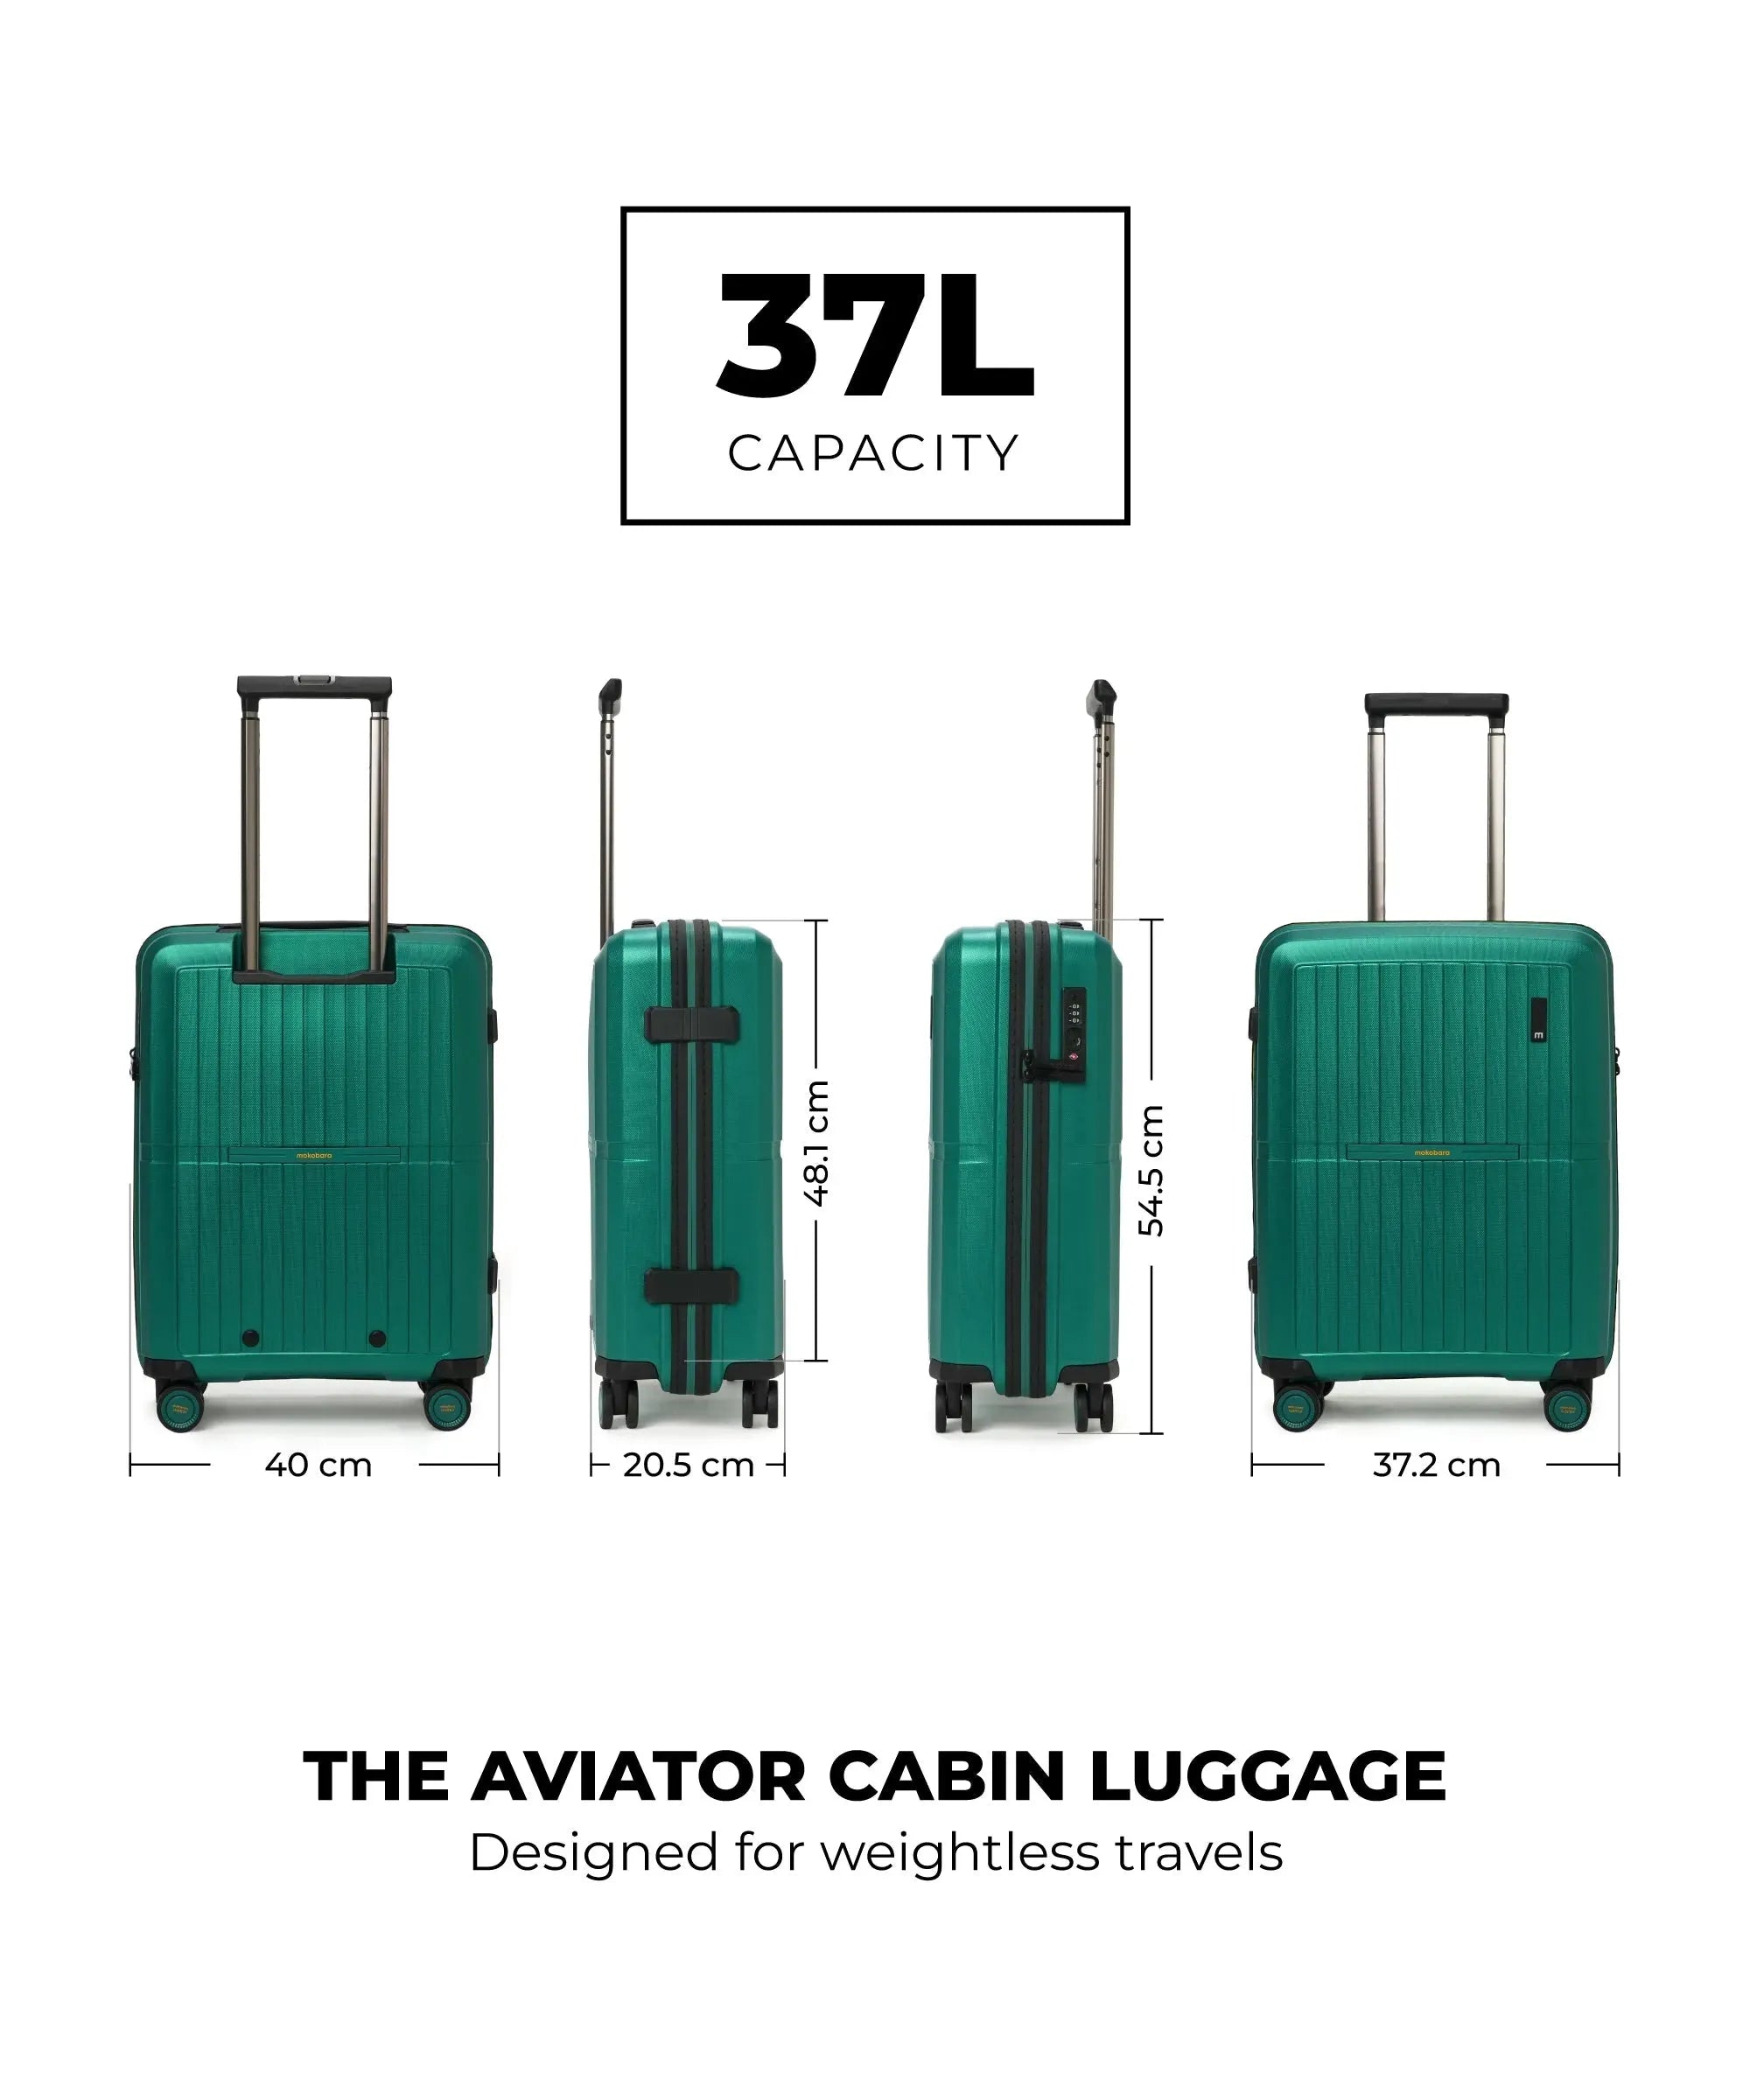 Color_Mic Drop | The Aviator Luggage